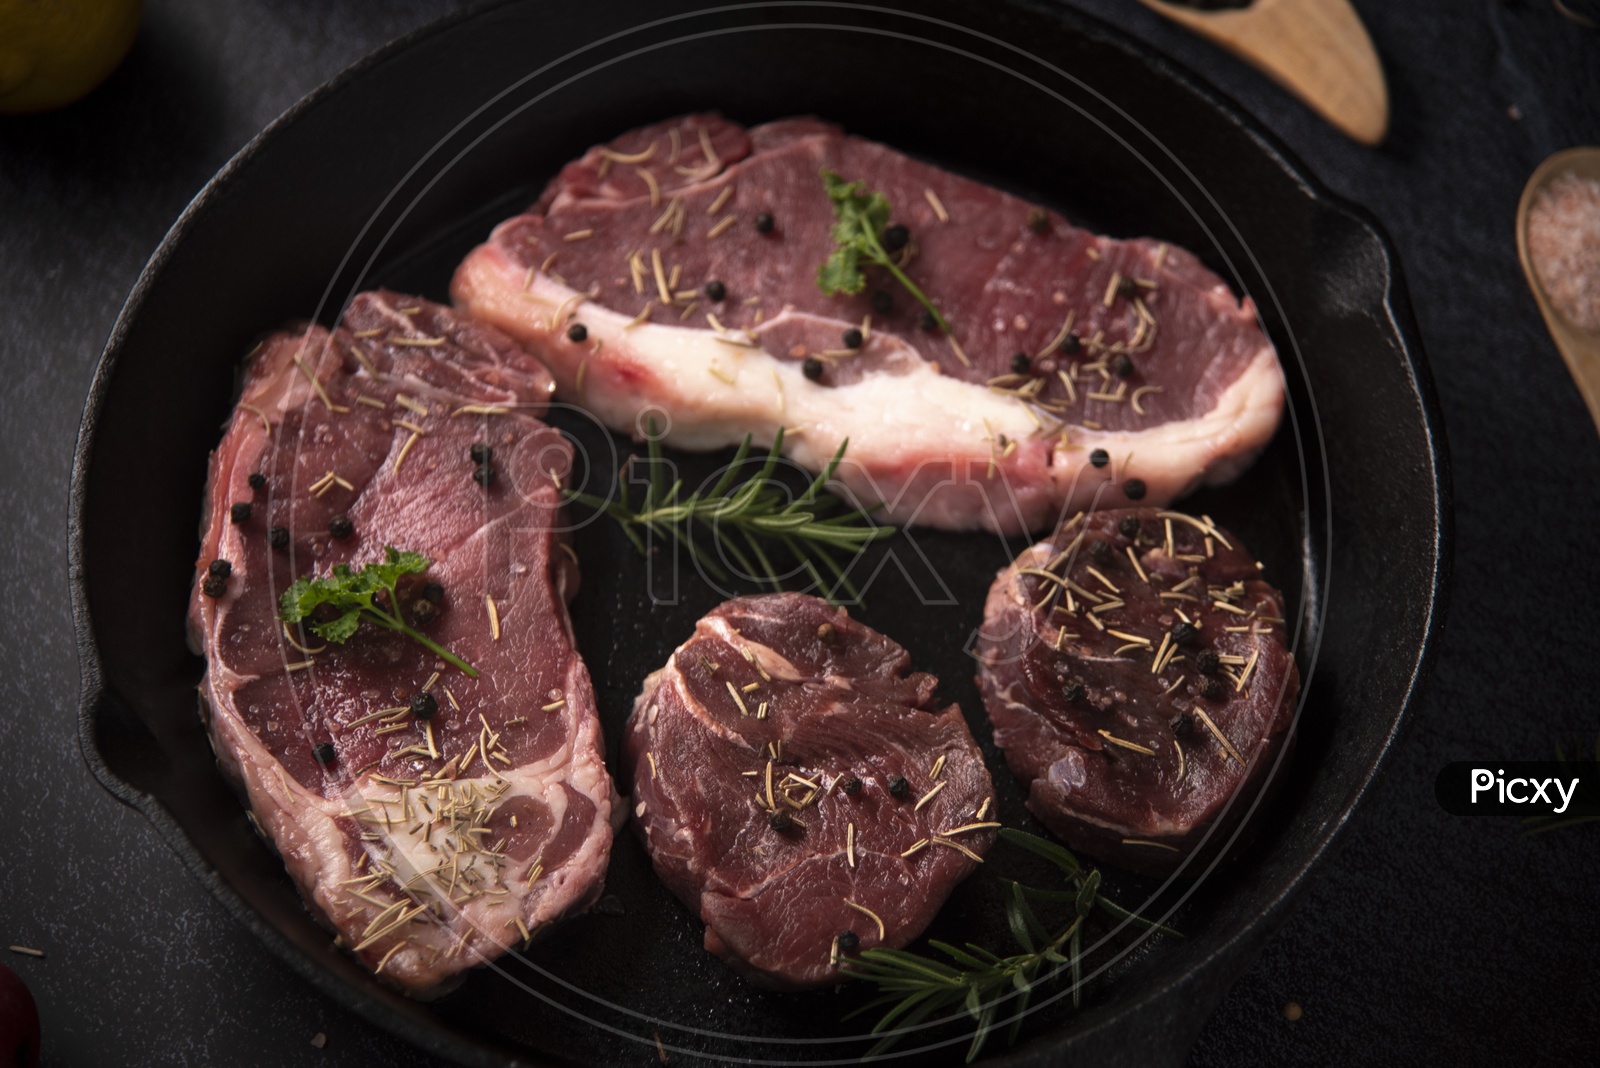 Fresh Raw Prime Black Angus Beef Steaks on Wooden Board: Tenderloin, Denver Cut, Striploin, Rib Eye